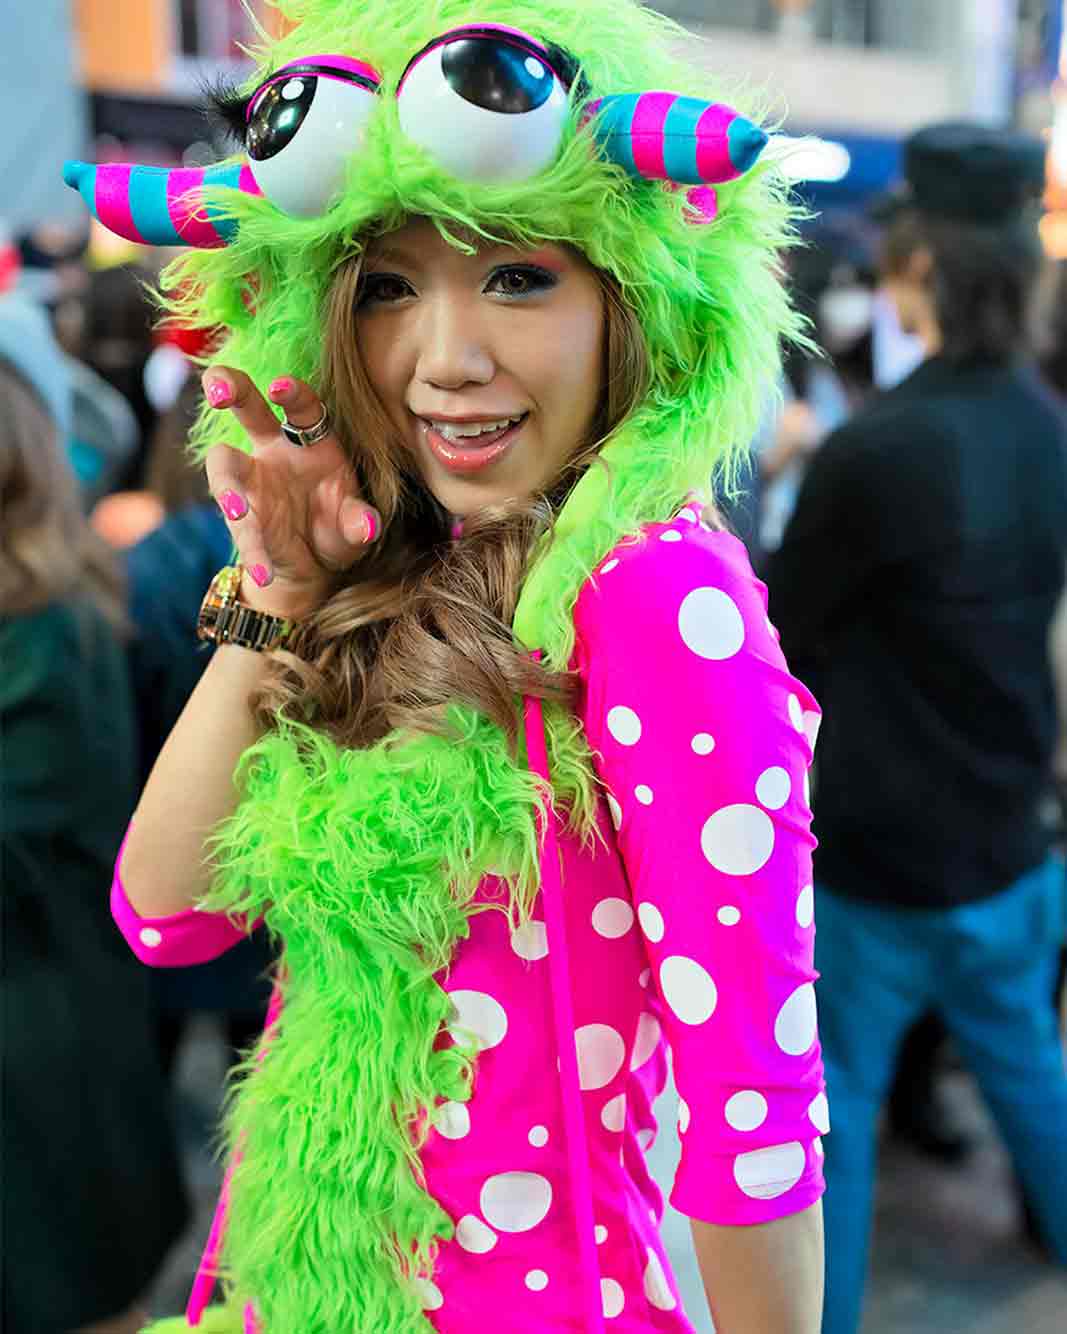 Cute and colorful Kawaii style Halloween disguise woman